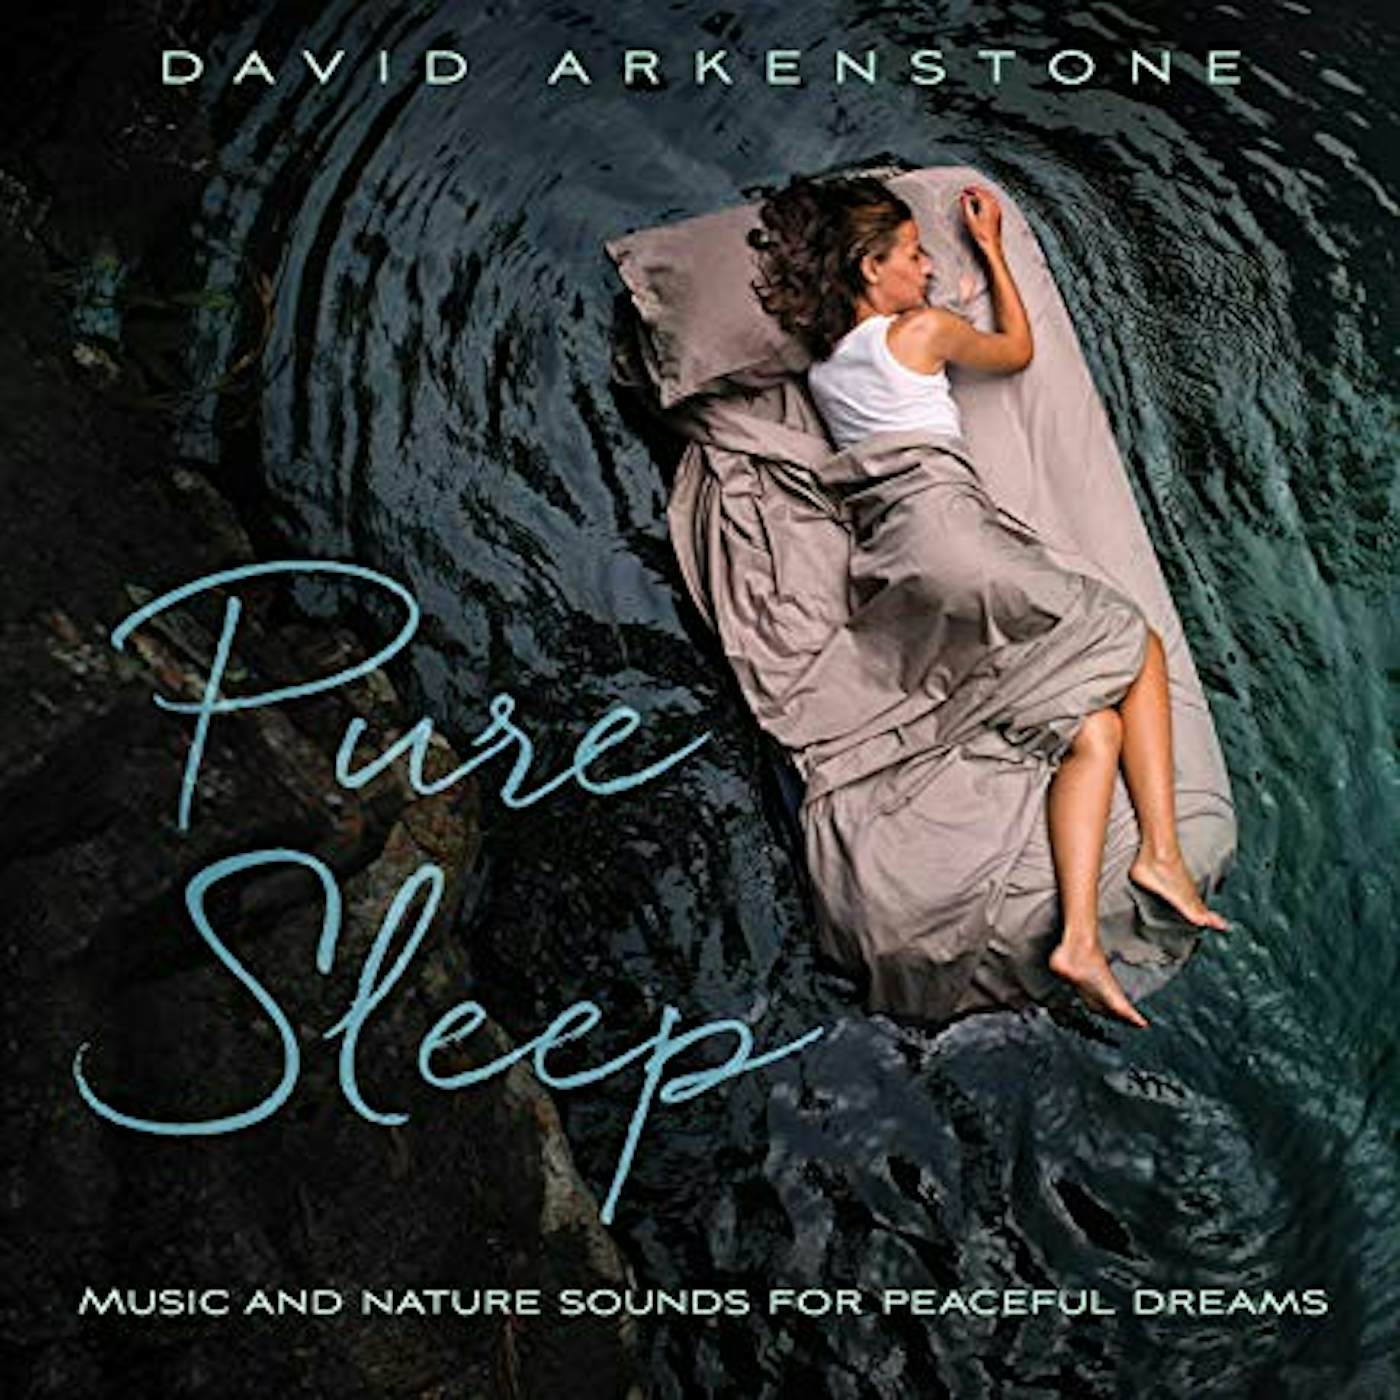 David Arkenstone PURE SLEEP CD